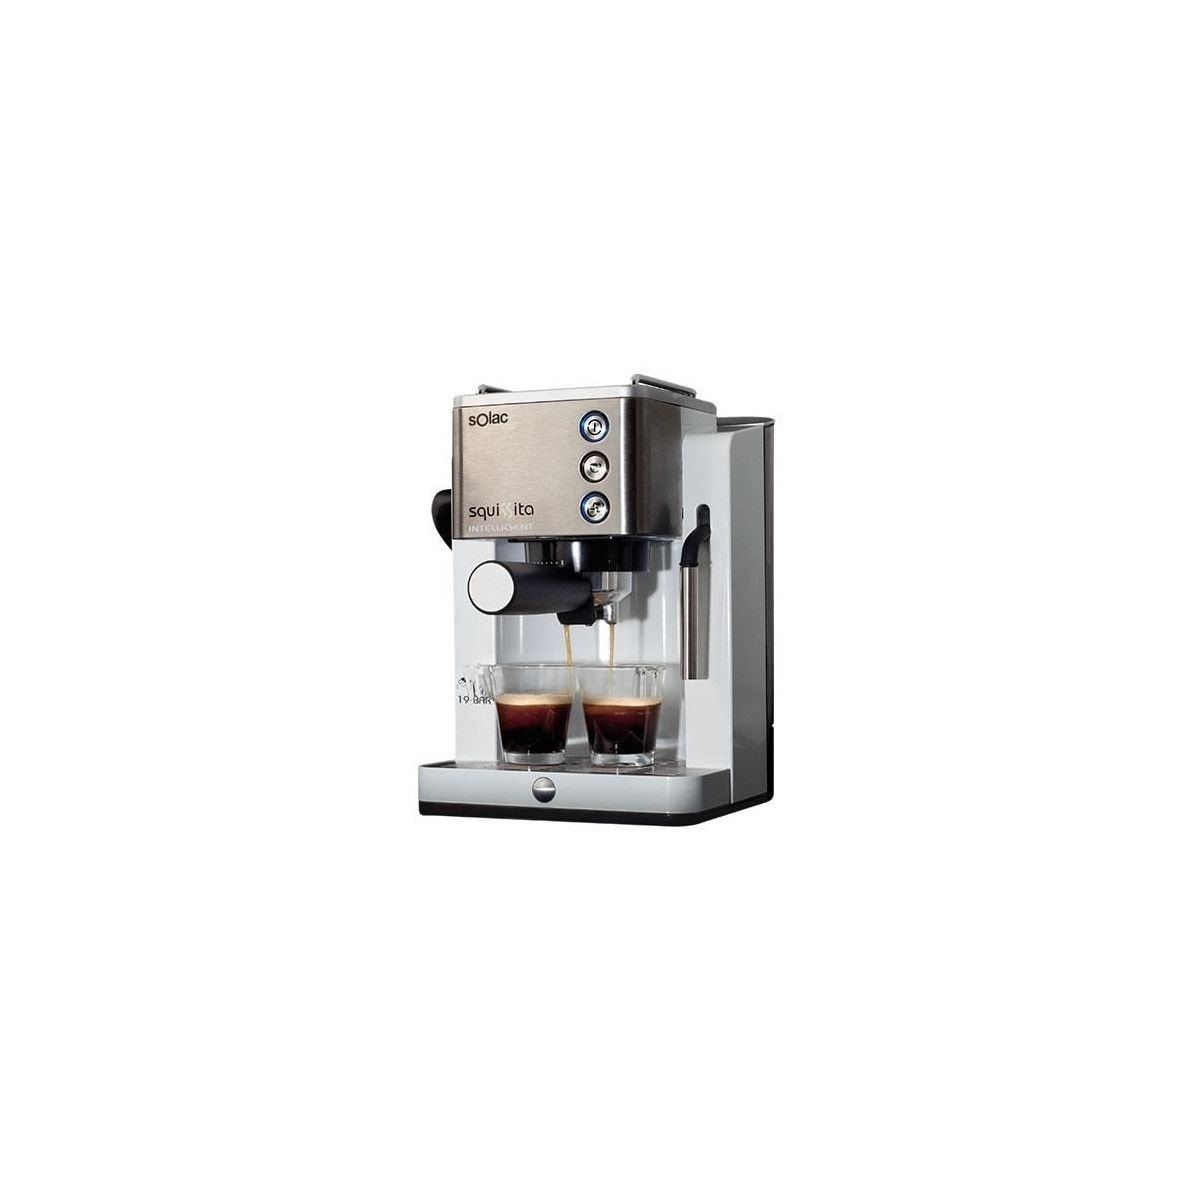 Comprar Cafetera espresso SOLAC Squissita Intelligent CE4494